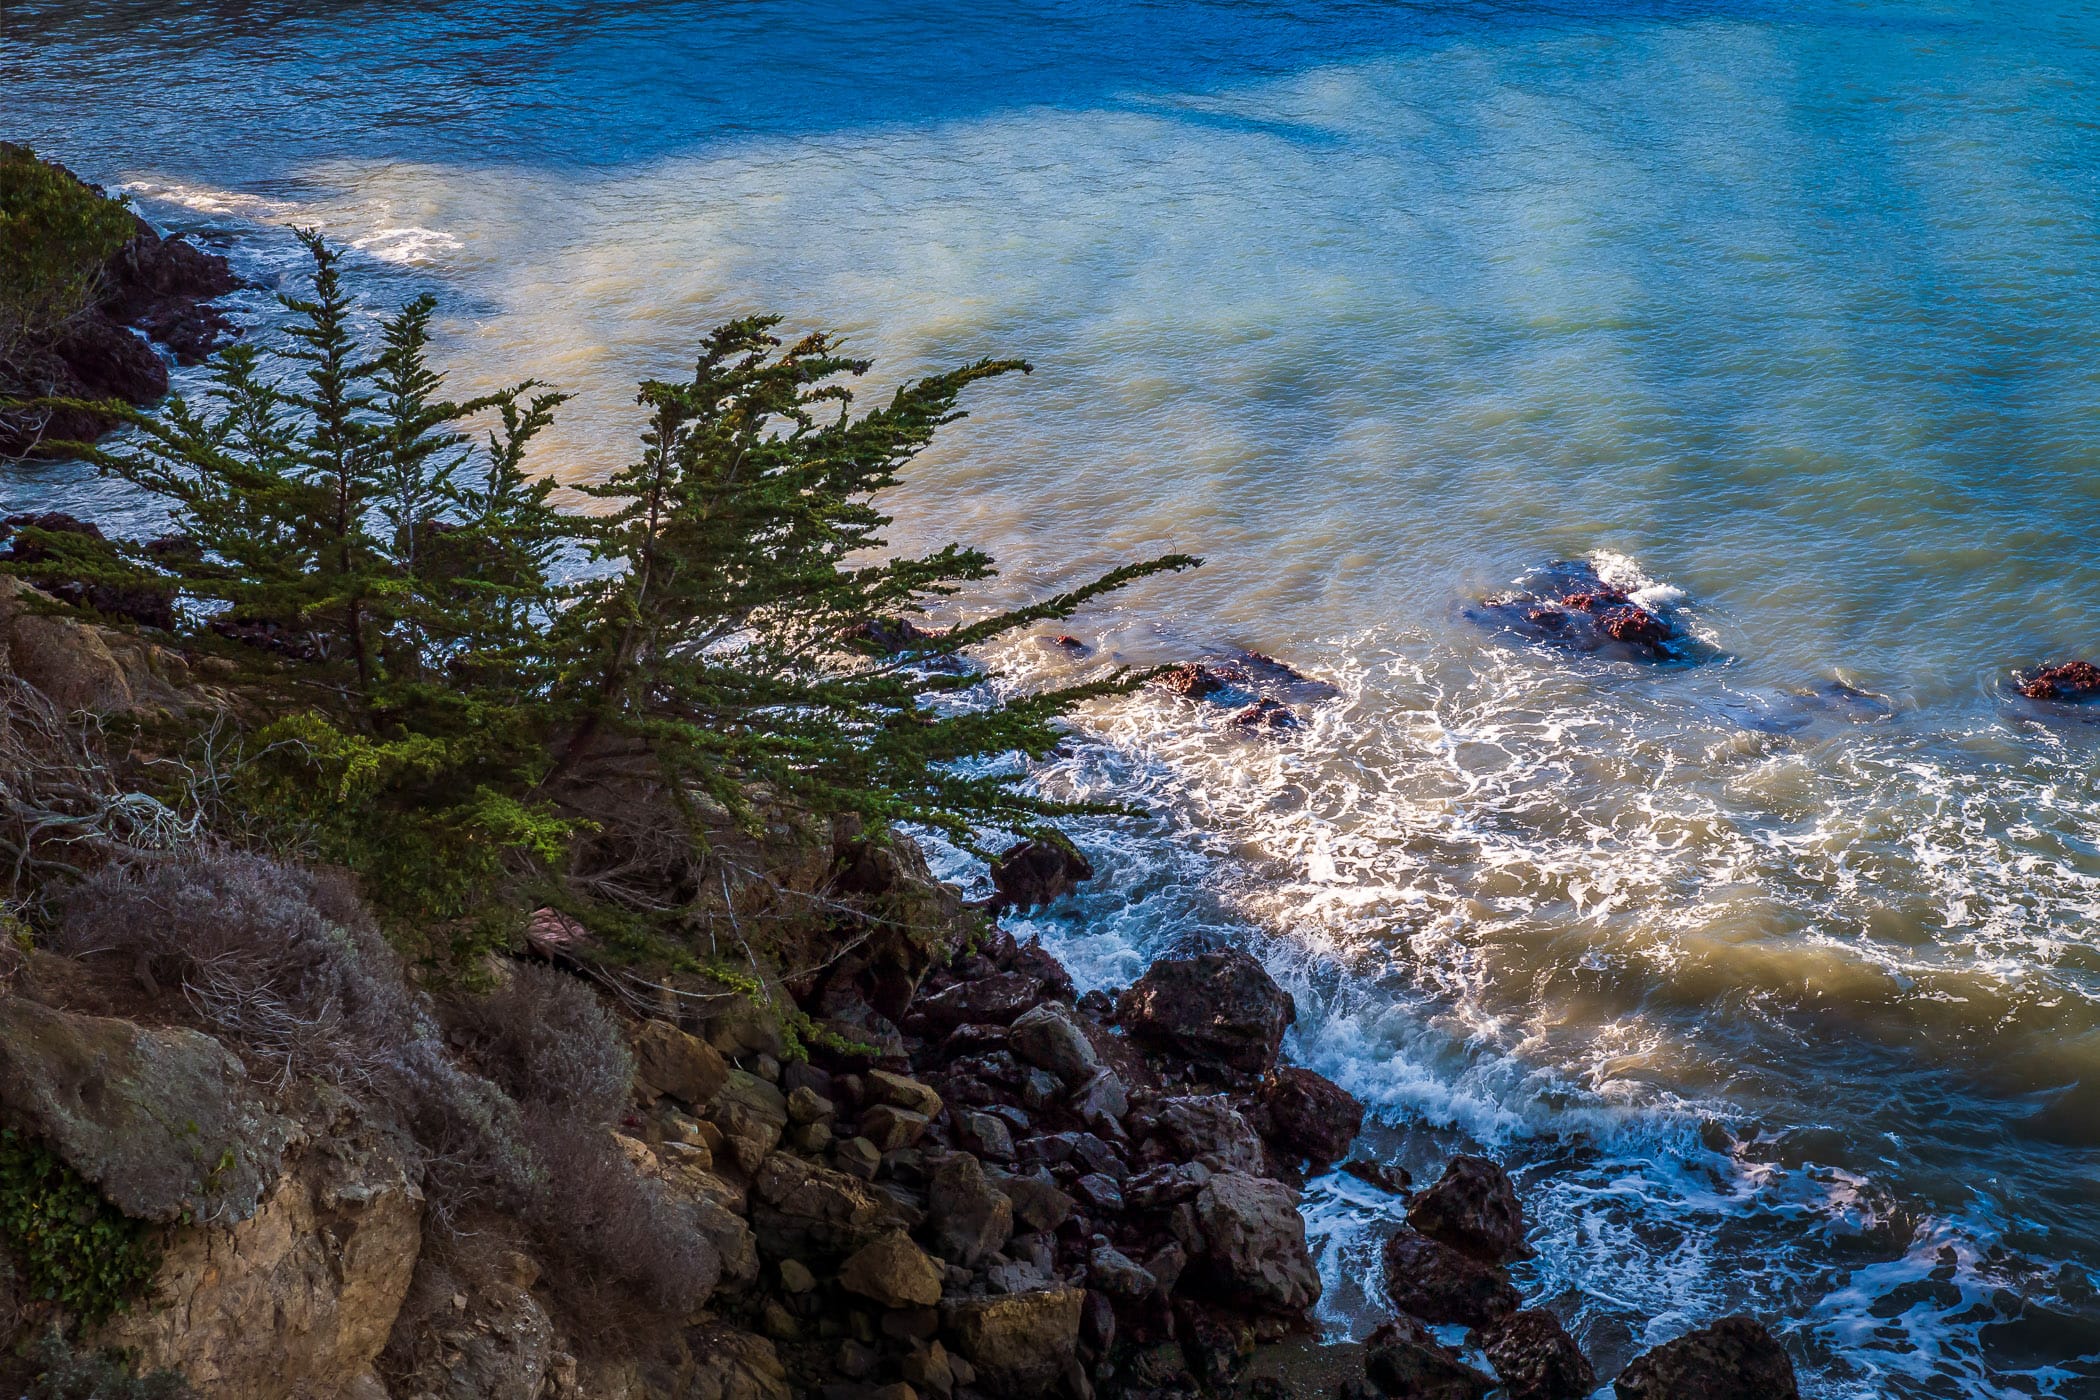 Waves in San Francisco Bay crash into the rocks at Black Point near Fort Mason National Park.